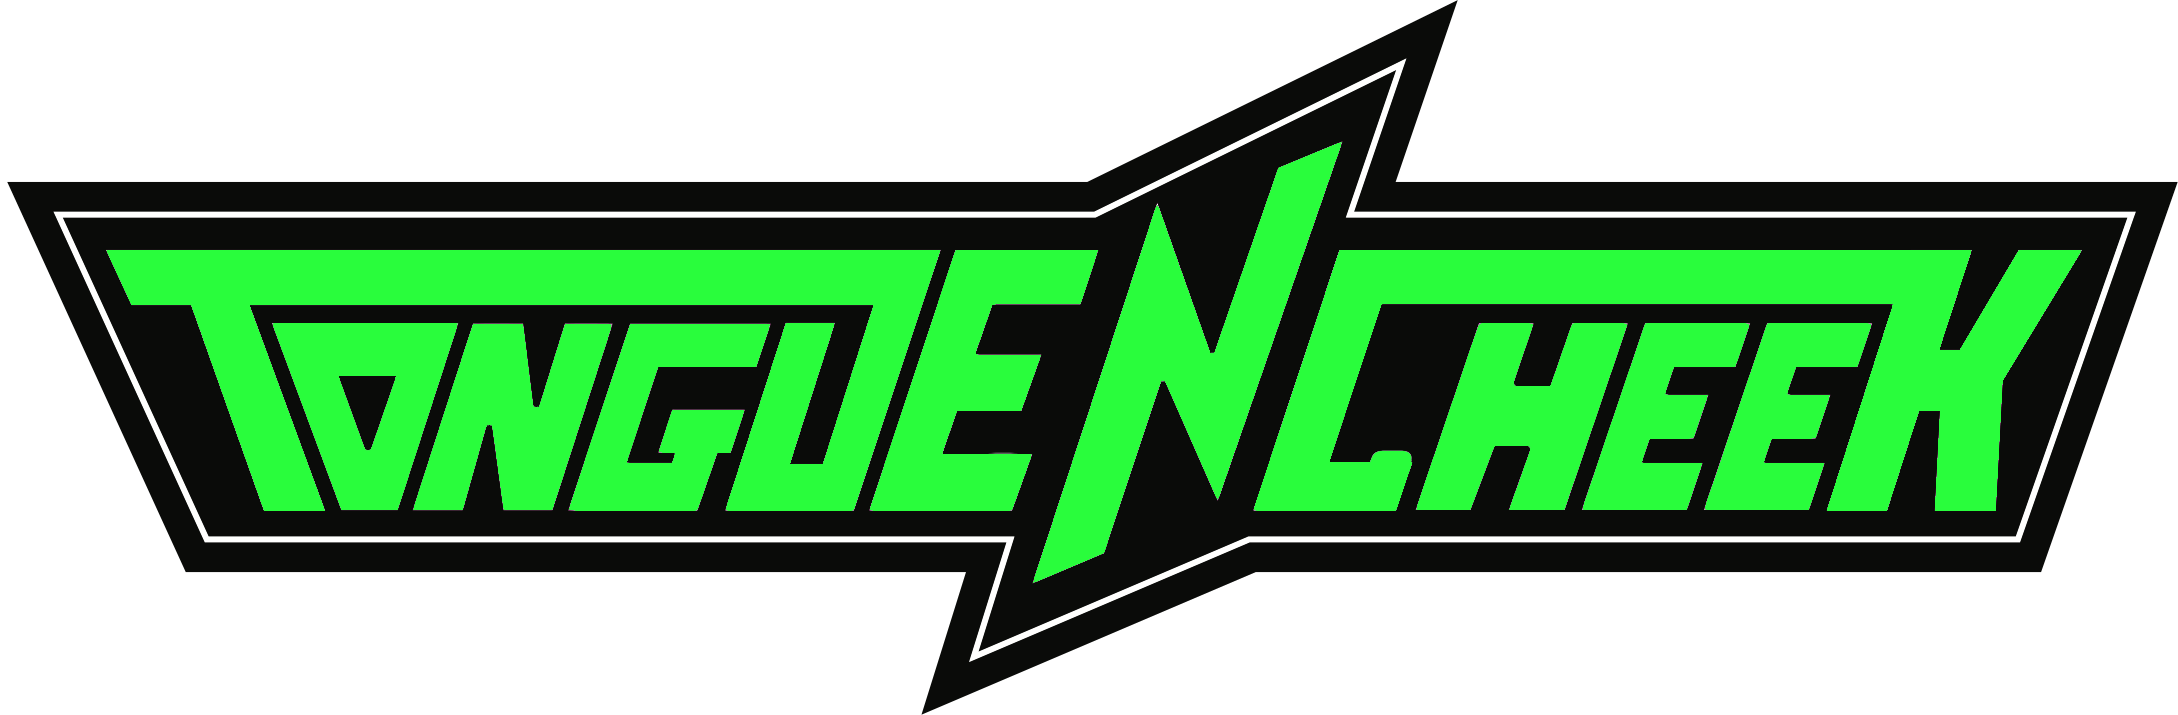 Logo - Green (no background)